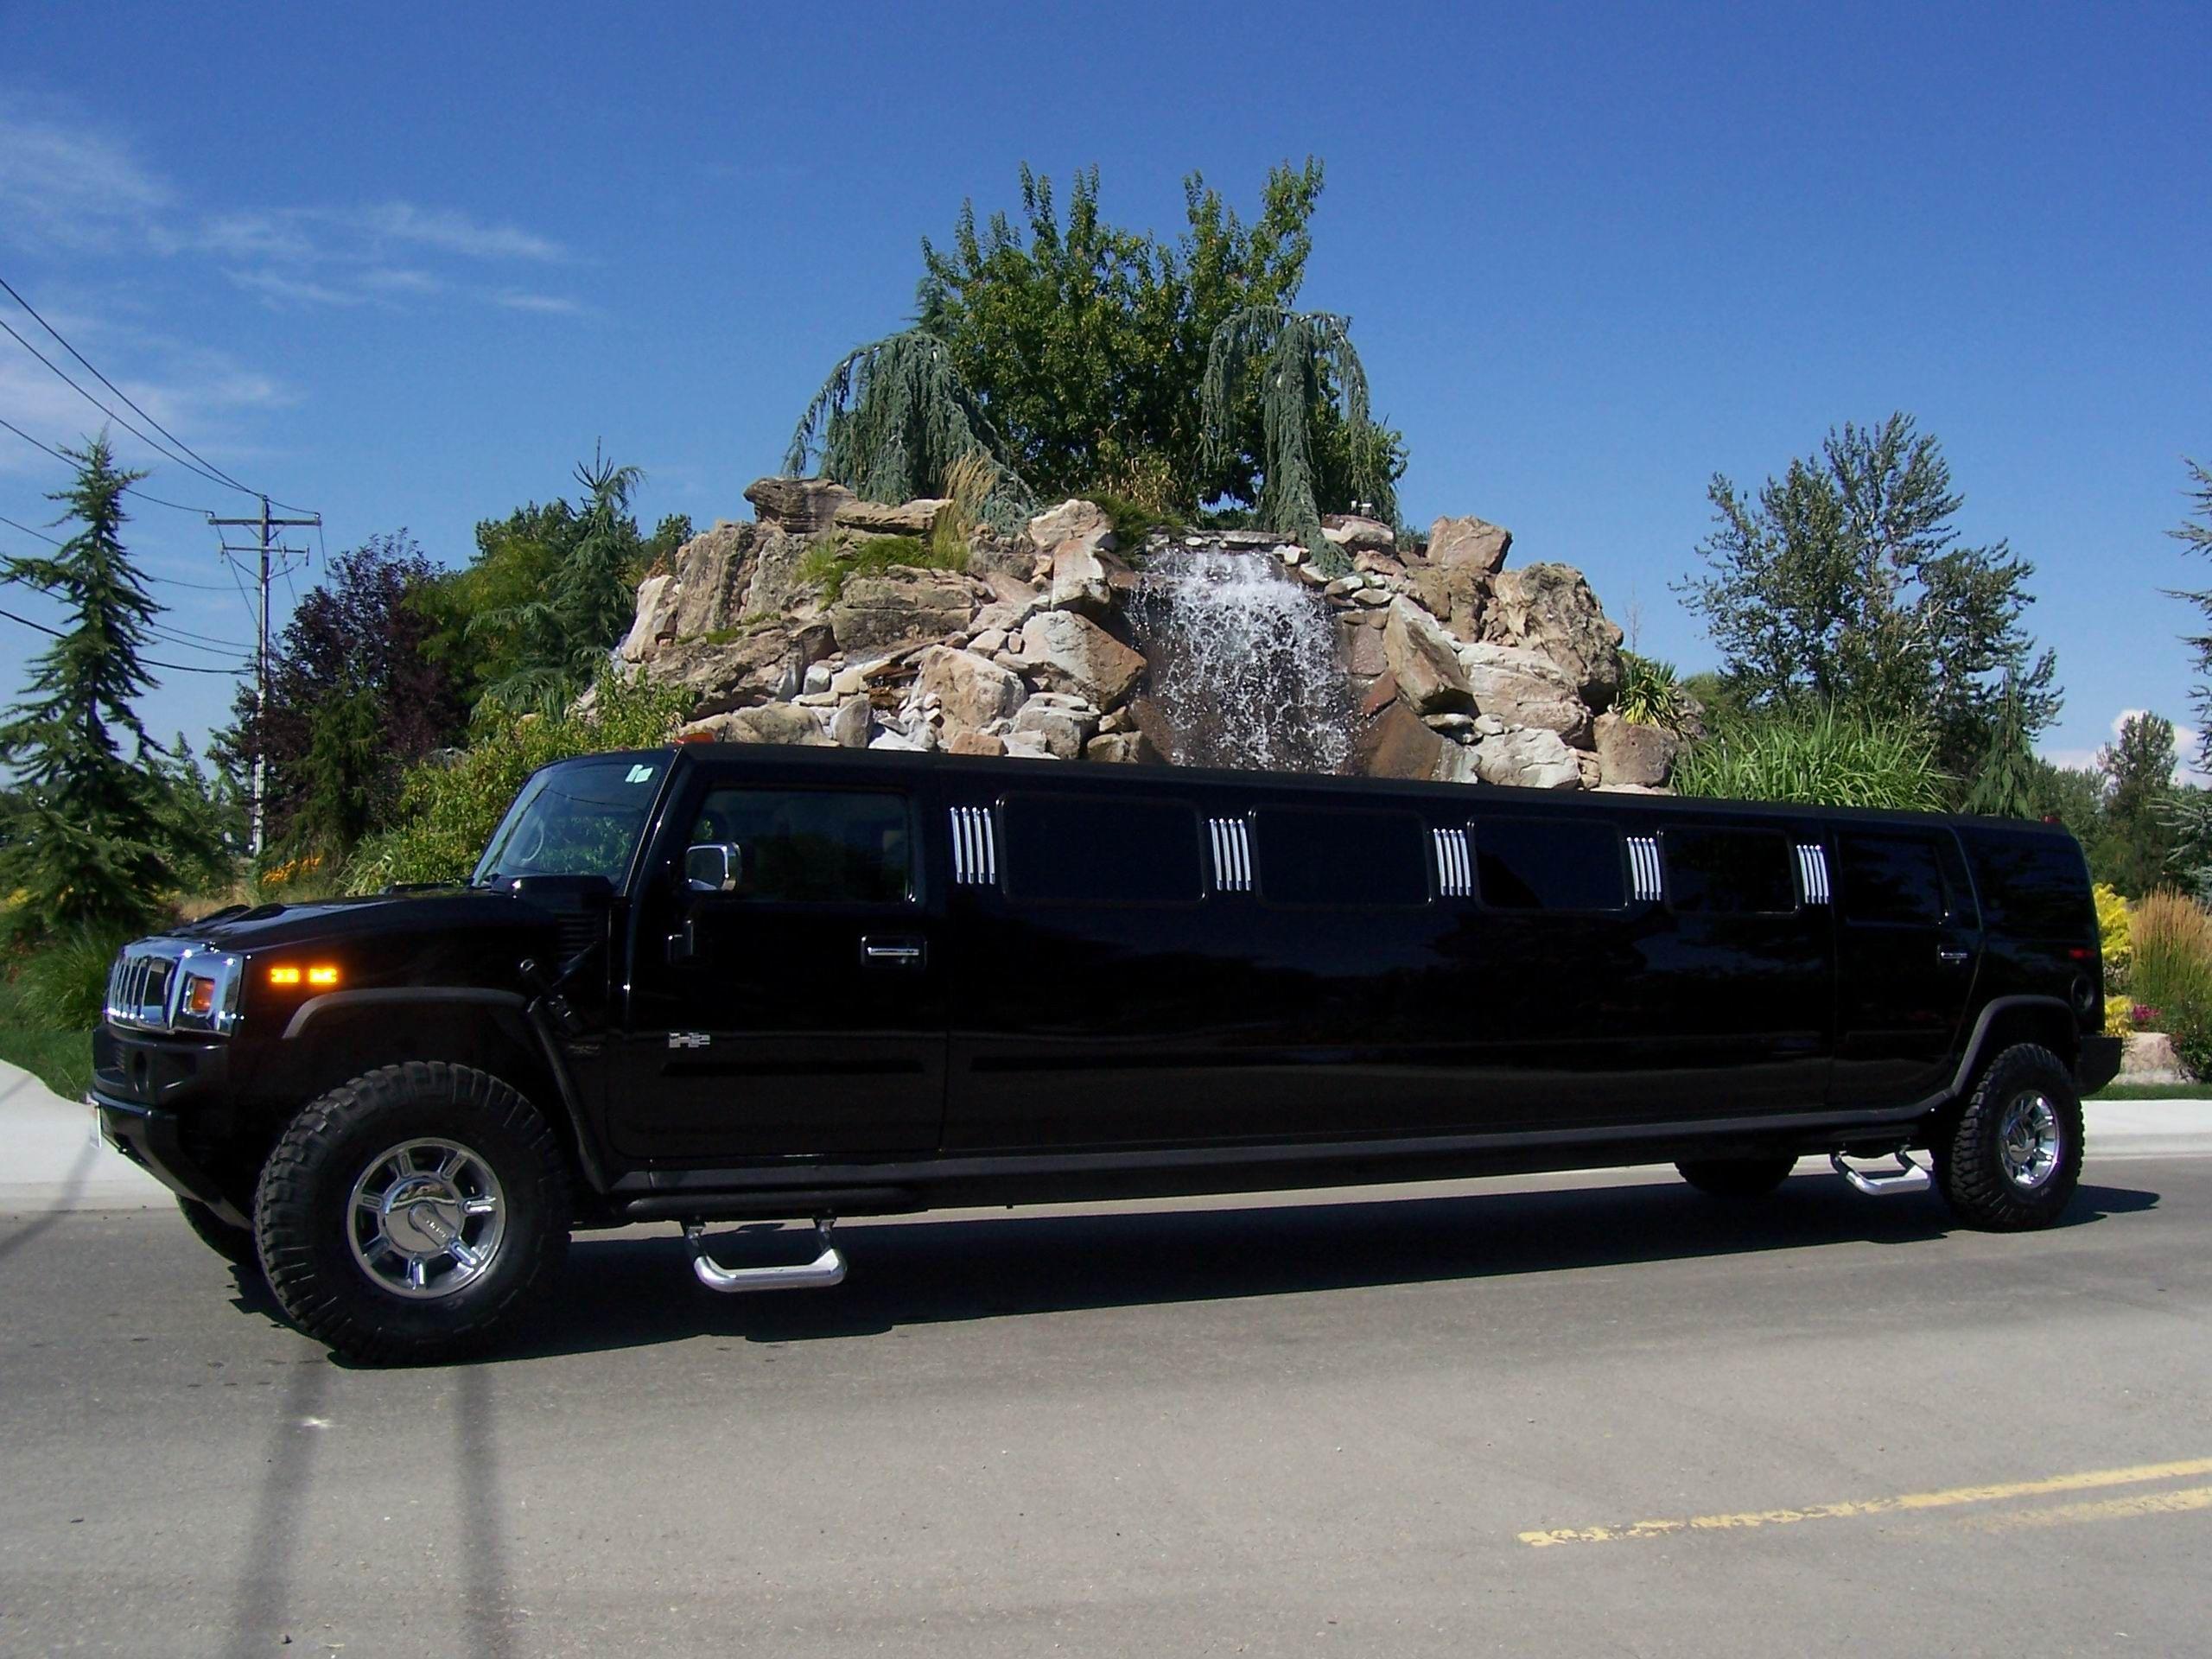 Limosine Black Hummer Limousines And 2560x1920 #limosine